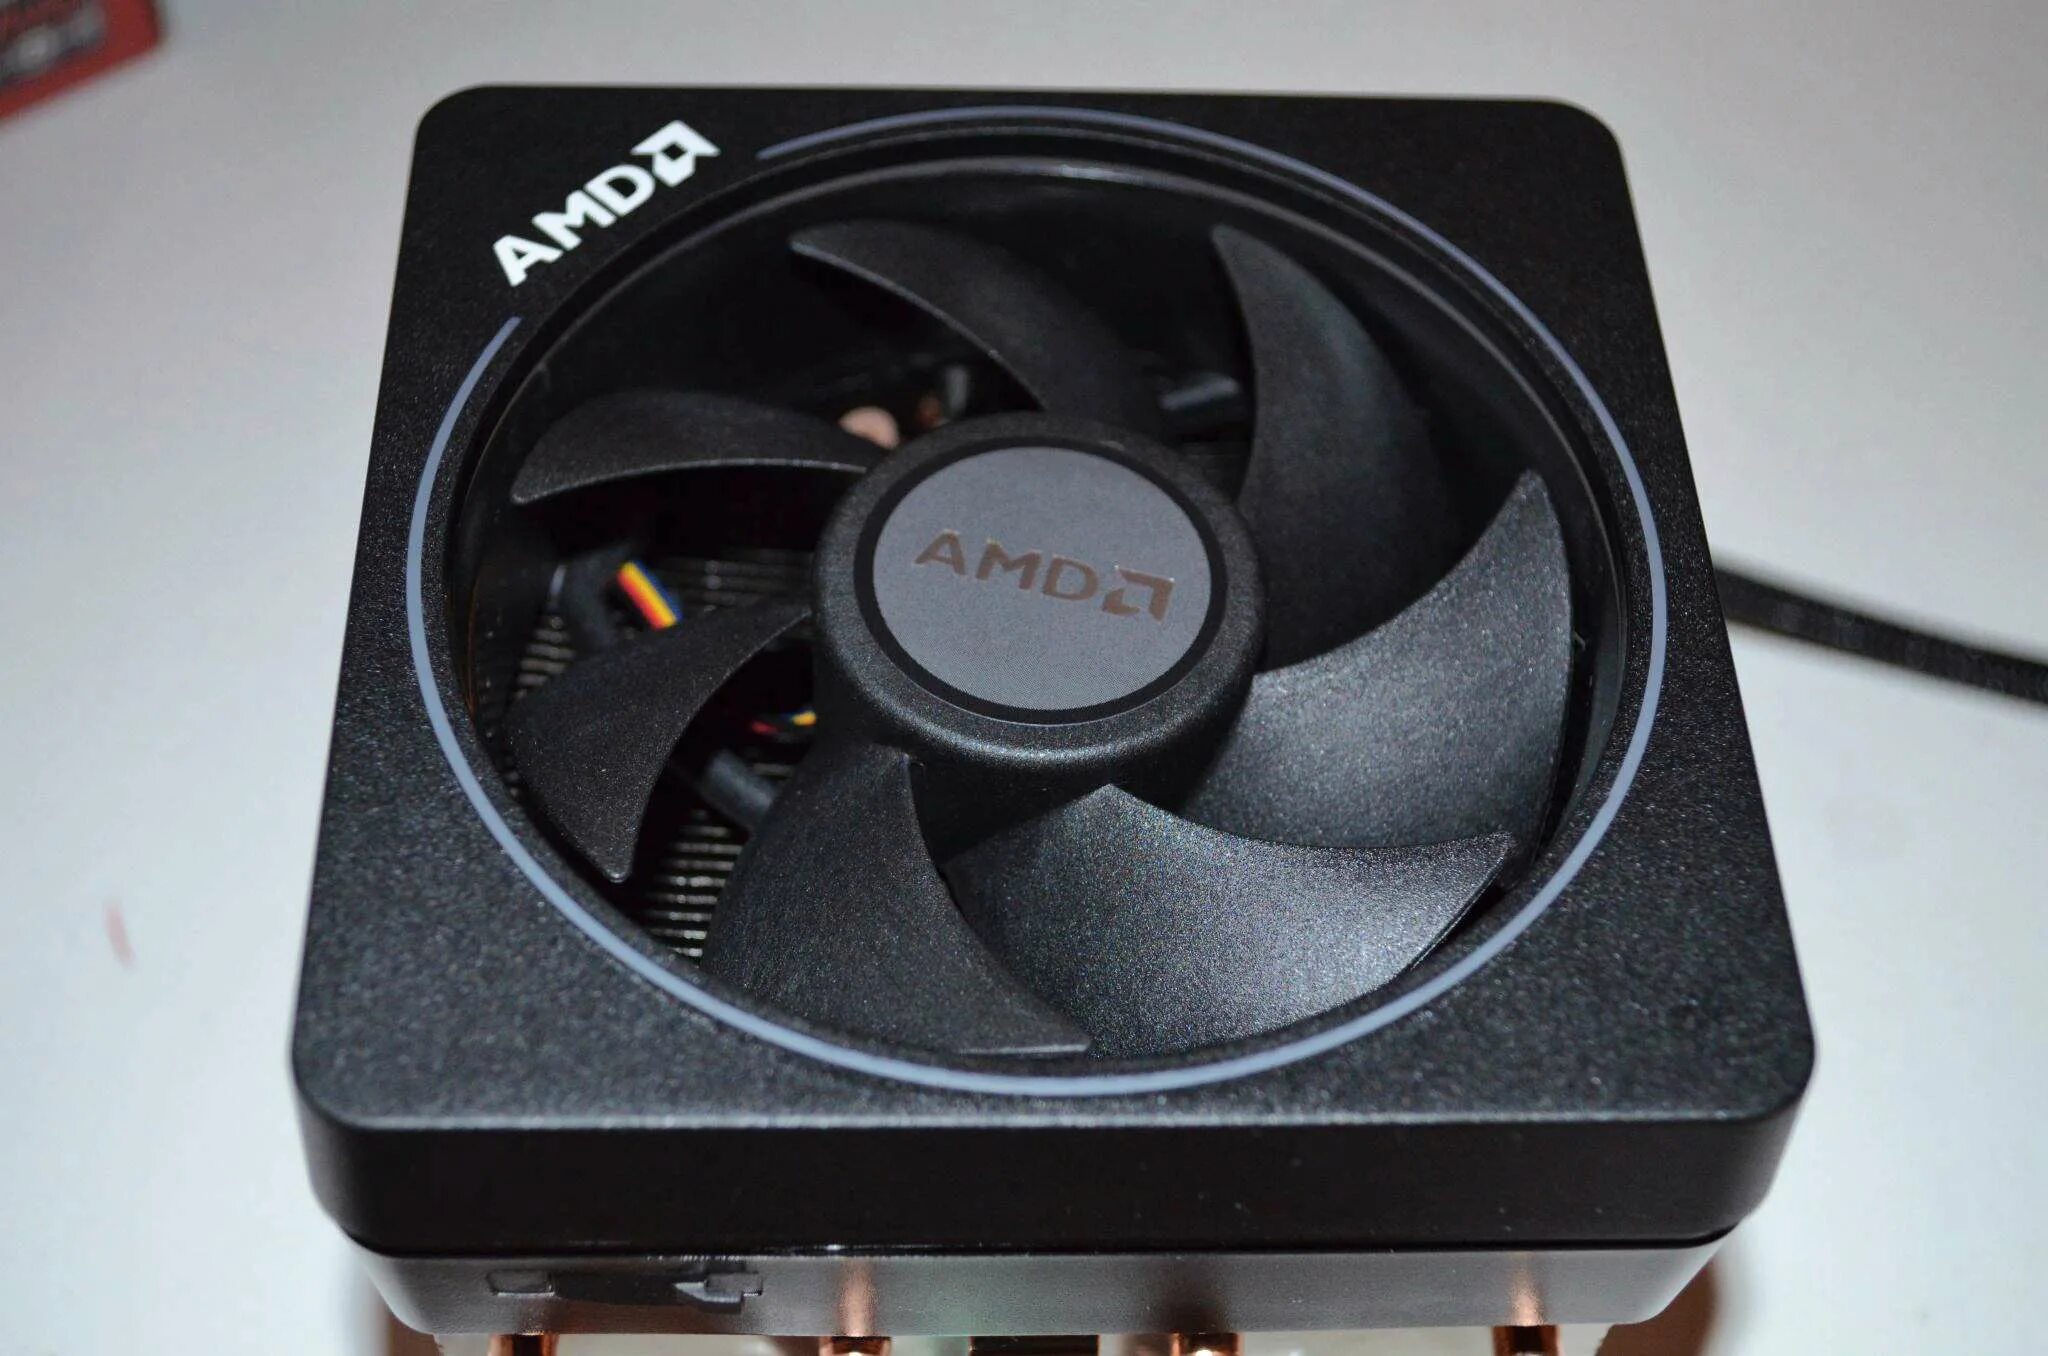 Кулер AMD Wraith. Кулер АМД Wraith Max. Кулер для процессора AMD Wraith Max. AMD 712-000071 Rev b.